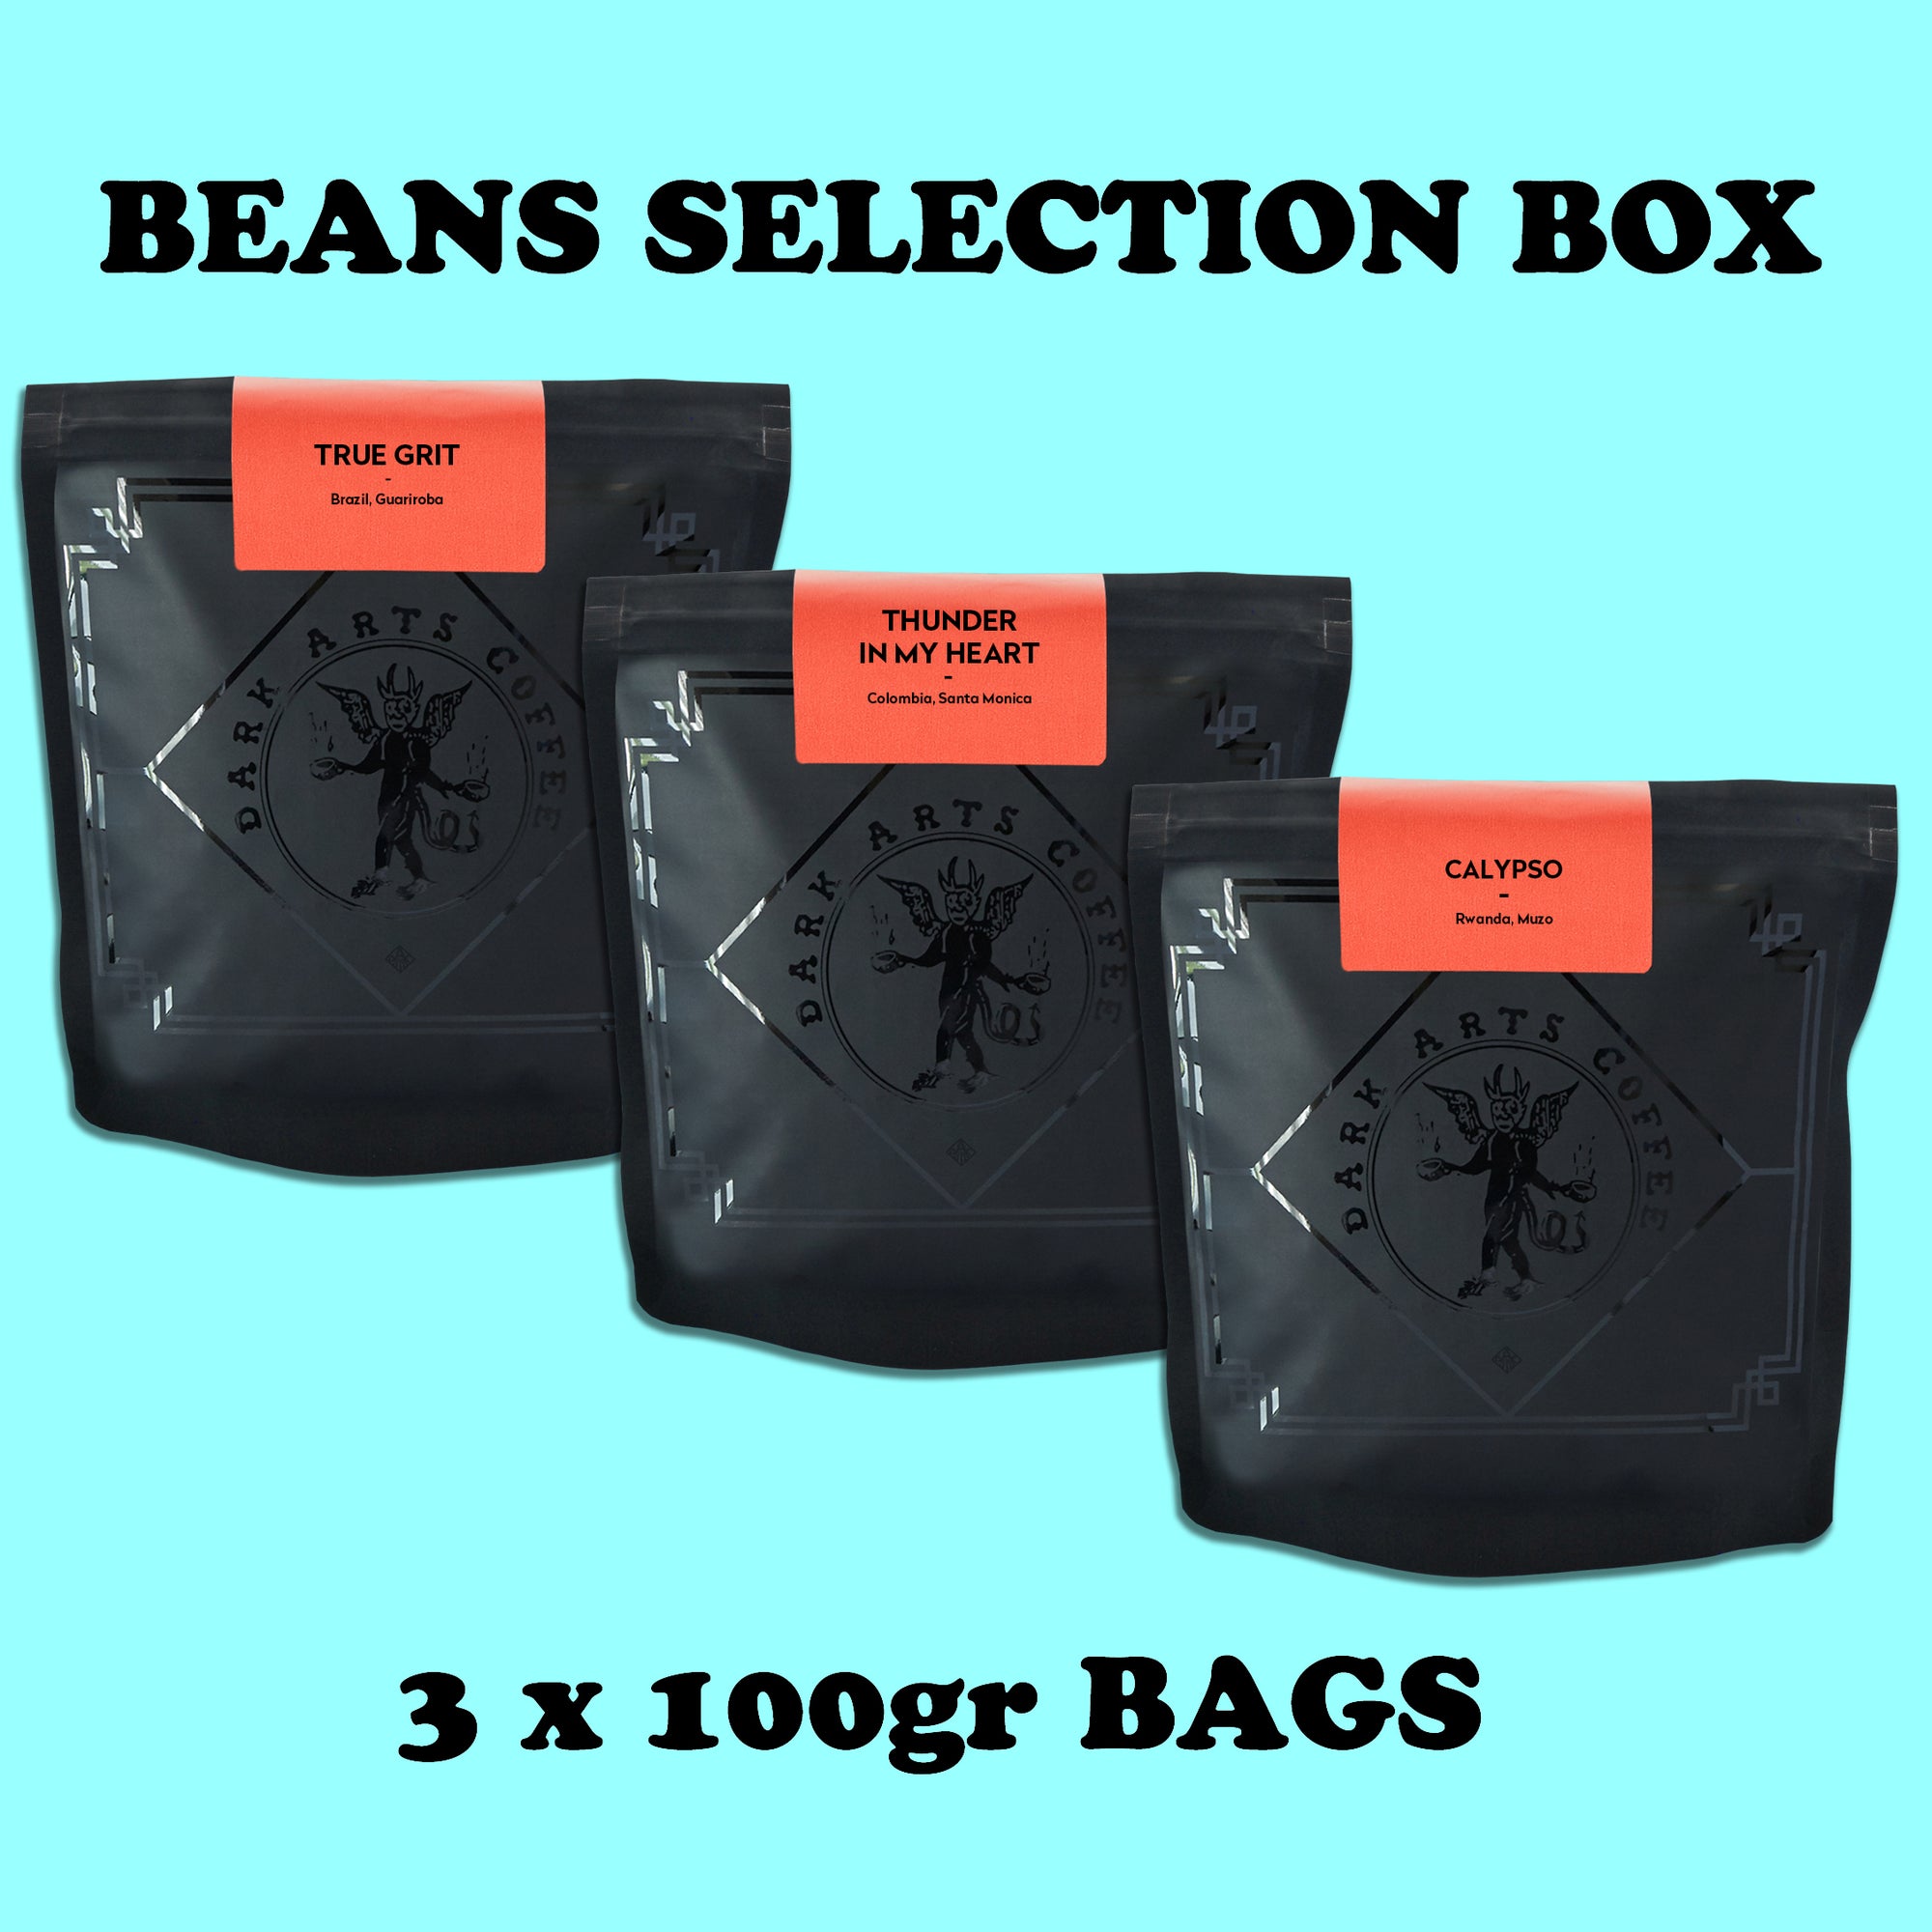 BEANS SELECTION BOX-3 X 100GR BAGS